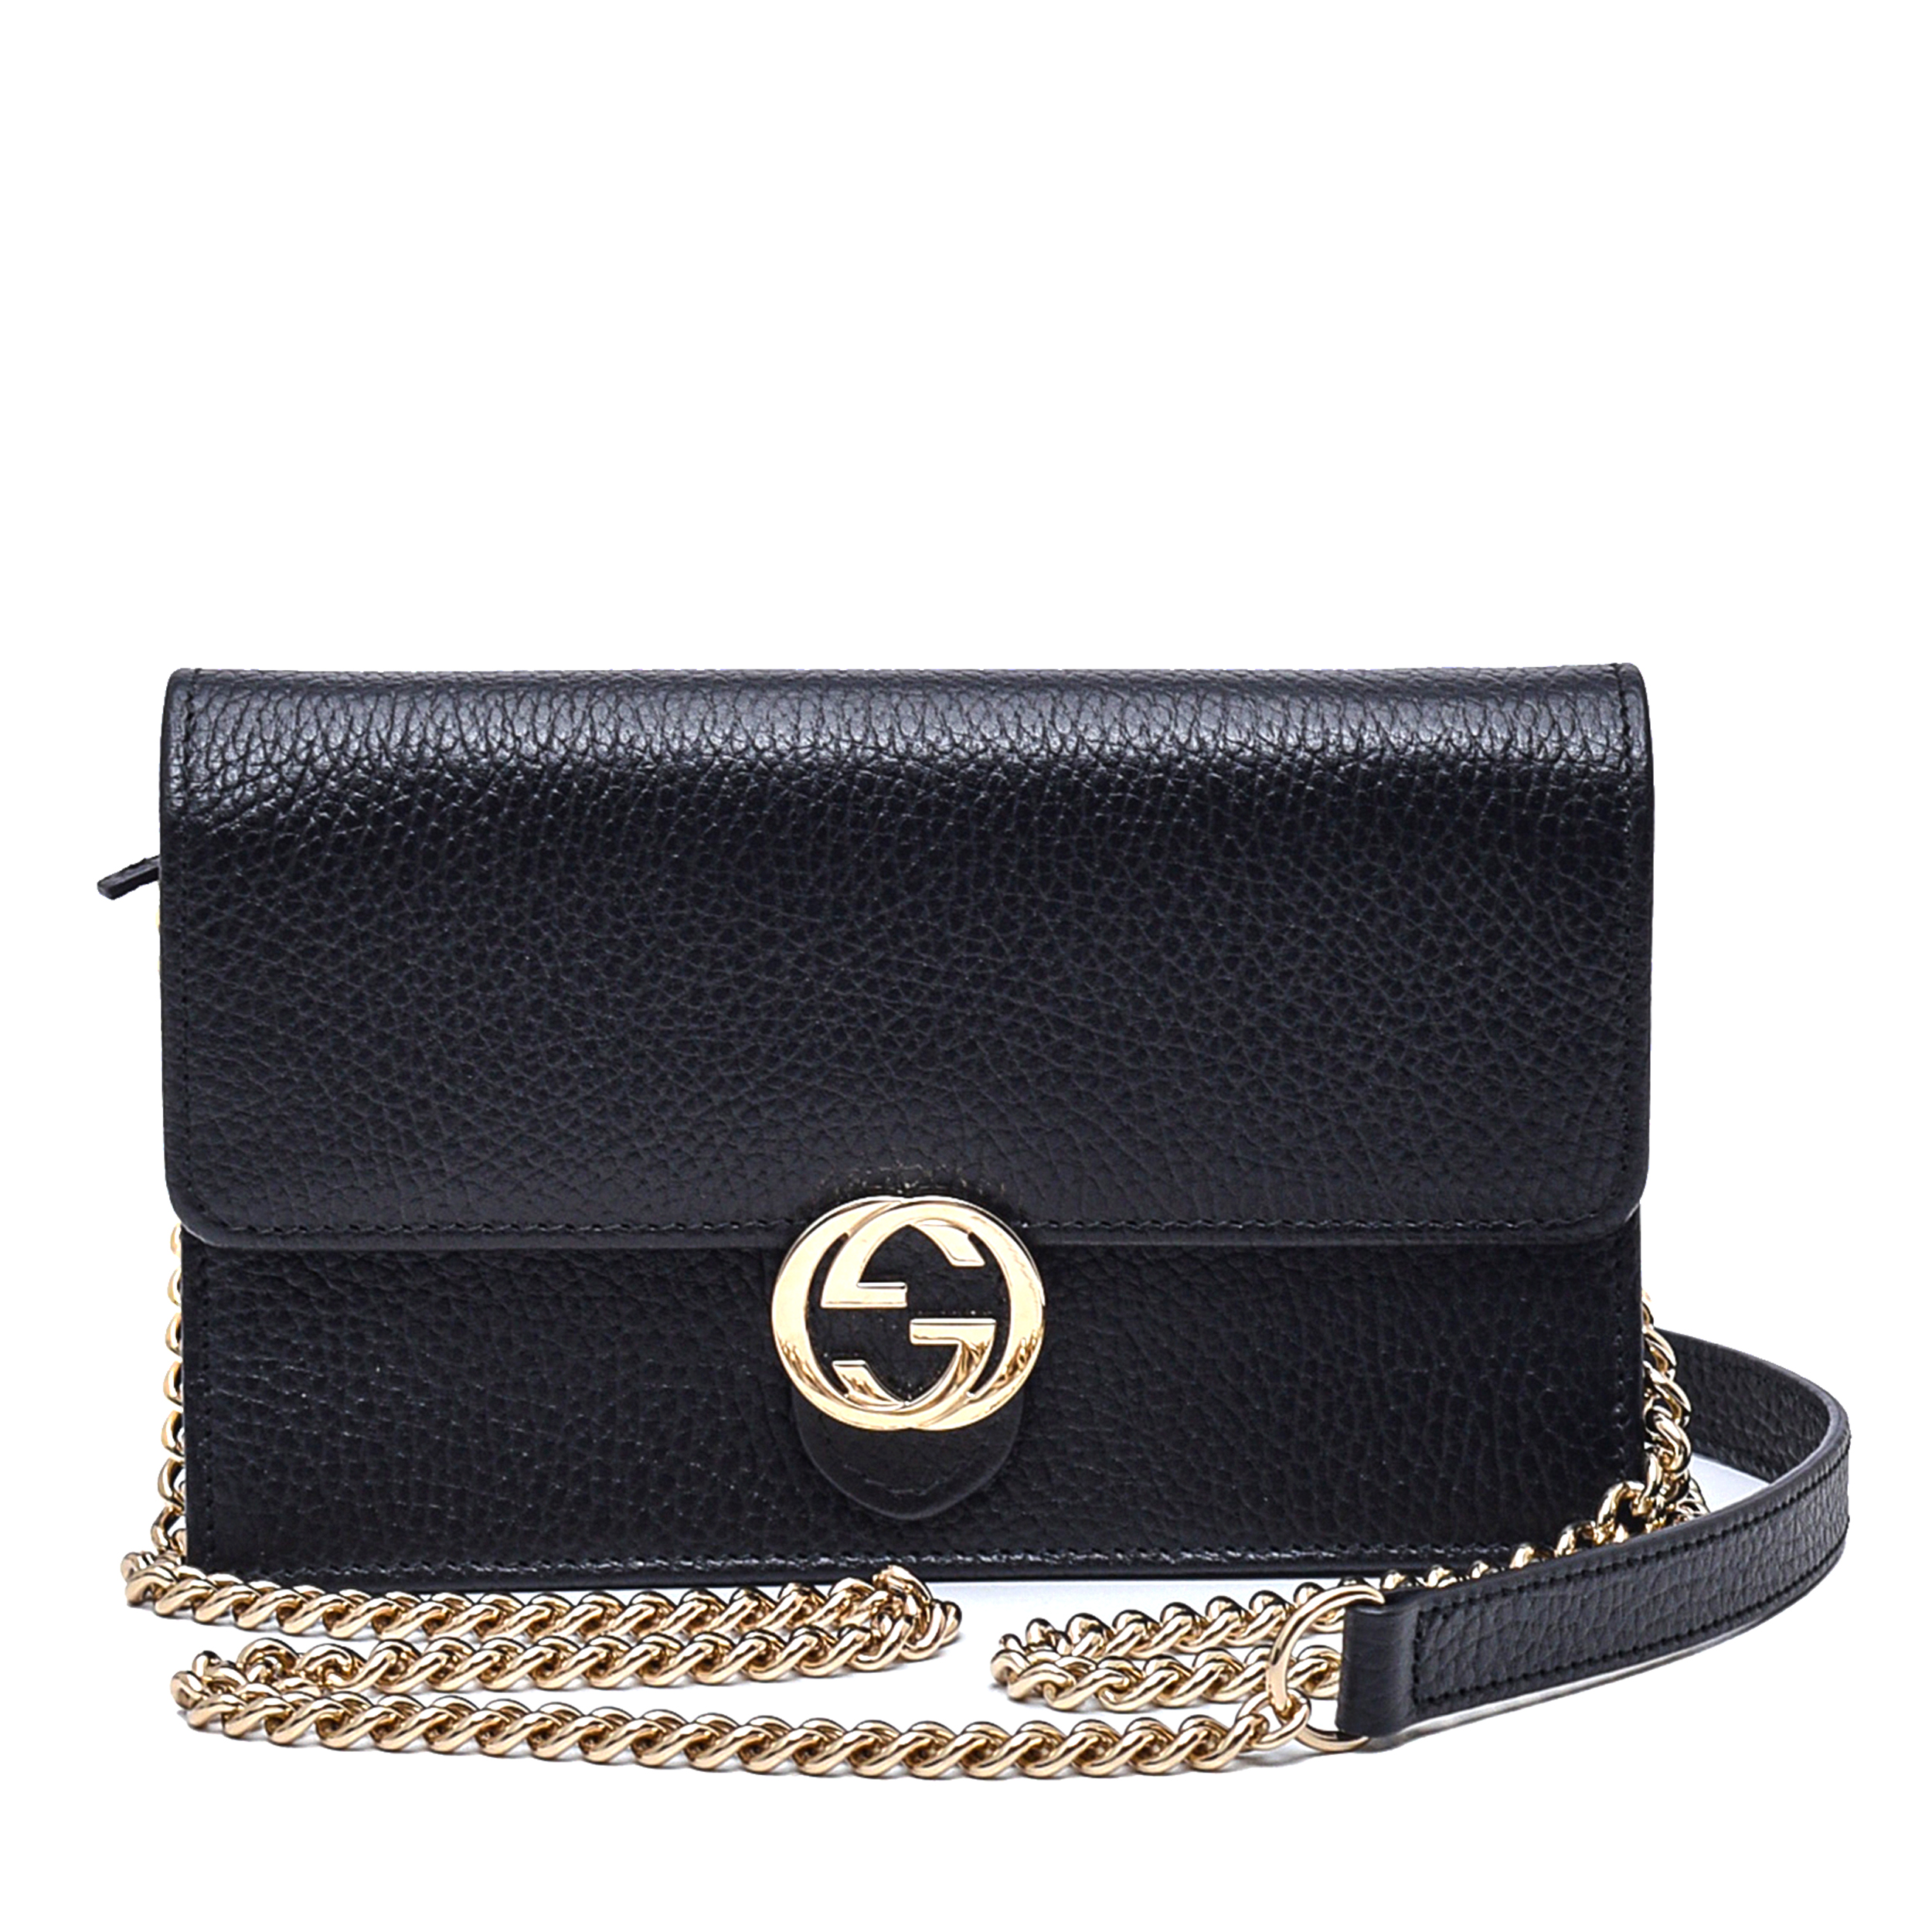 Gucci - Black Granied Leather Interlocking Bag